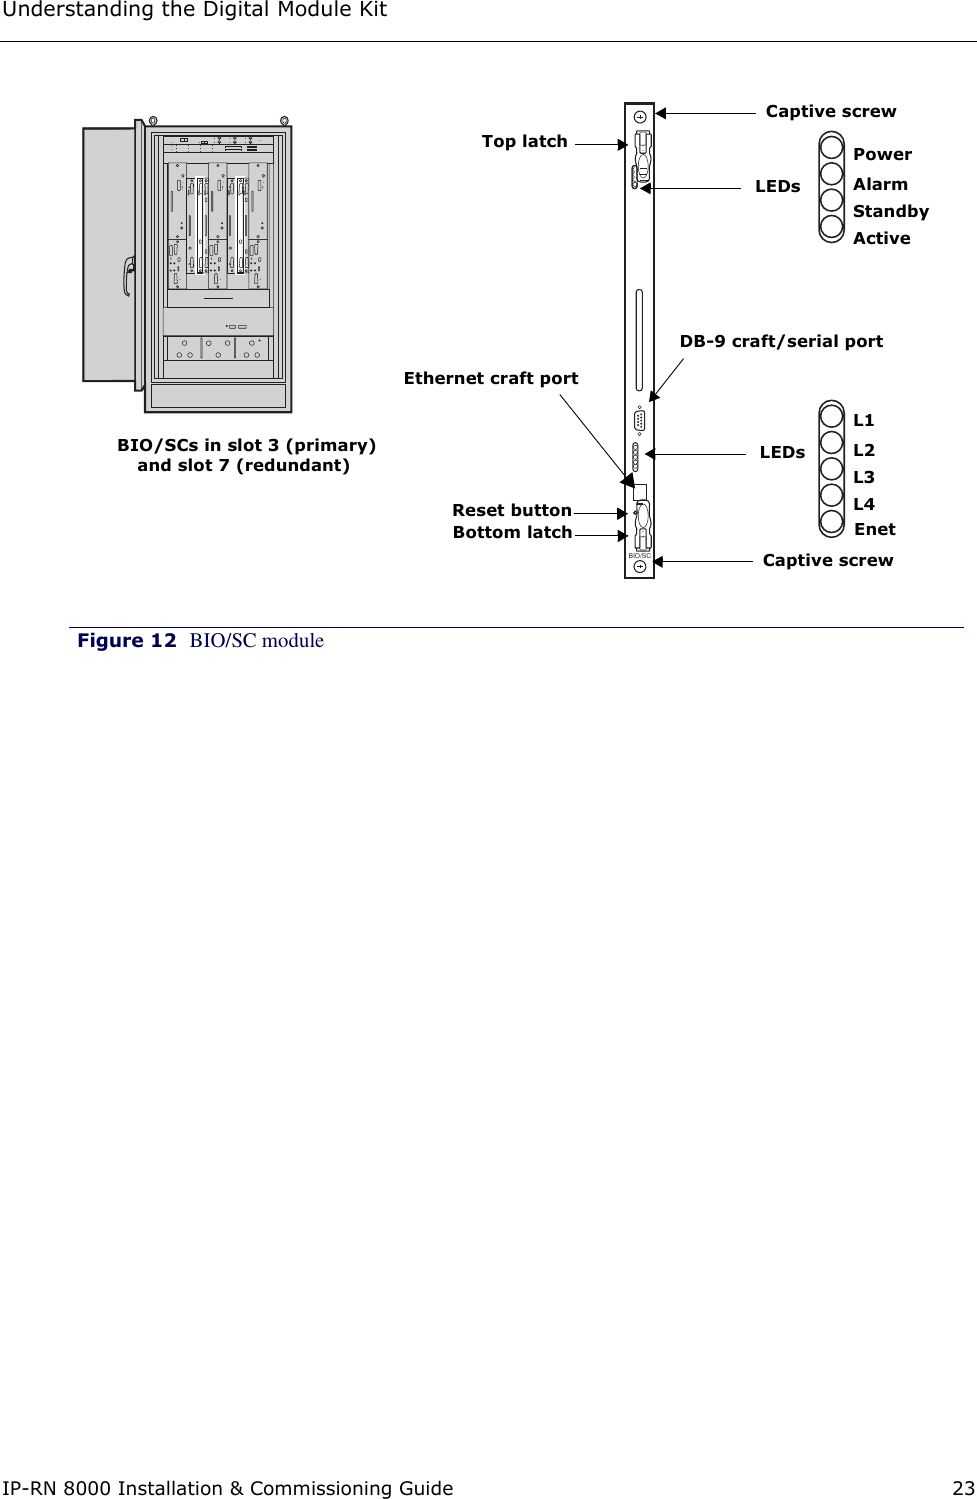 Understanding the Digital Module KitIP-RN 8000 Installation &amp; Commissioning Guide 23Figure 12 BIO/SC moduleBIO/SCPowerAlarmStandbyActiveL1L2L3L4DB-9 craft/serial portBIO/SCs in slot 3 (primary)  Top latch and slot 7 (redundant)EnetEthernet craft portLEDsCaptive screwLEDsBottom latch Captive screwReset button 